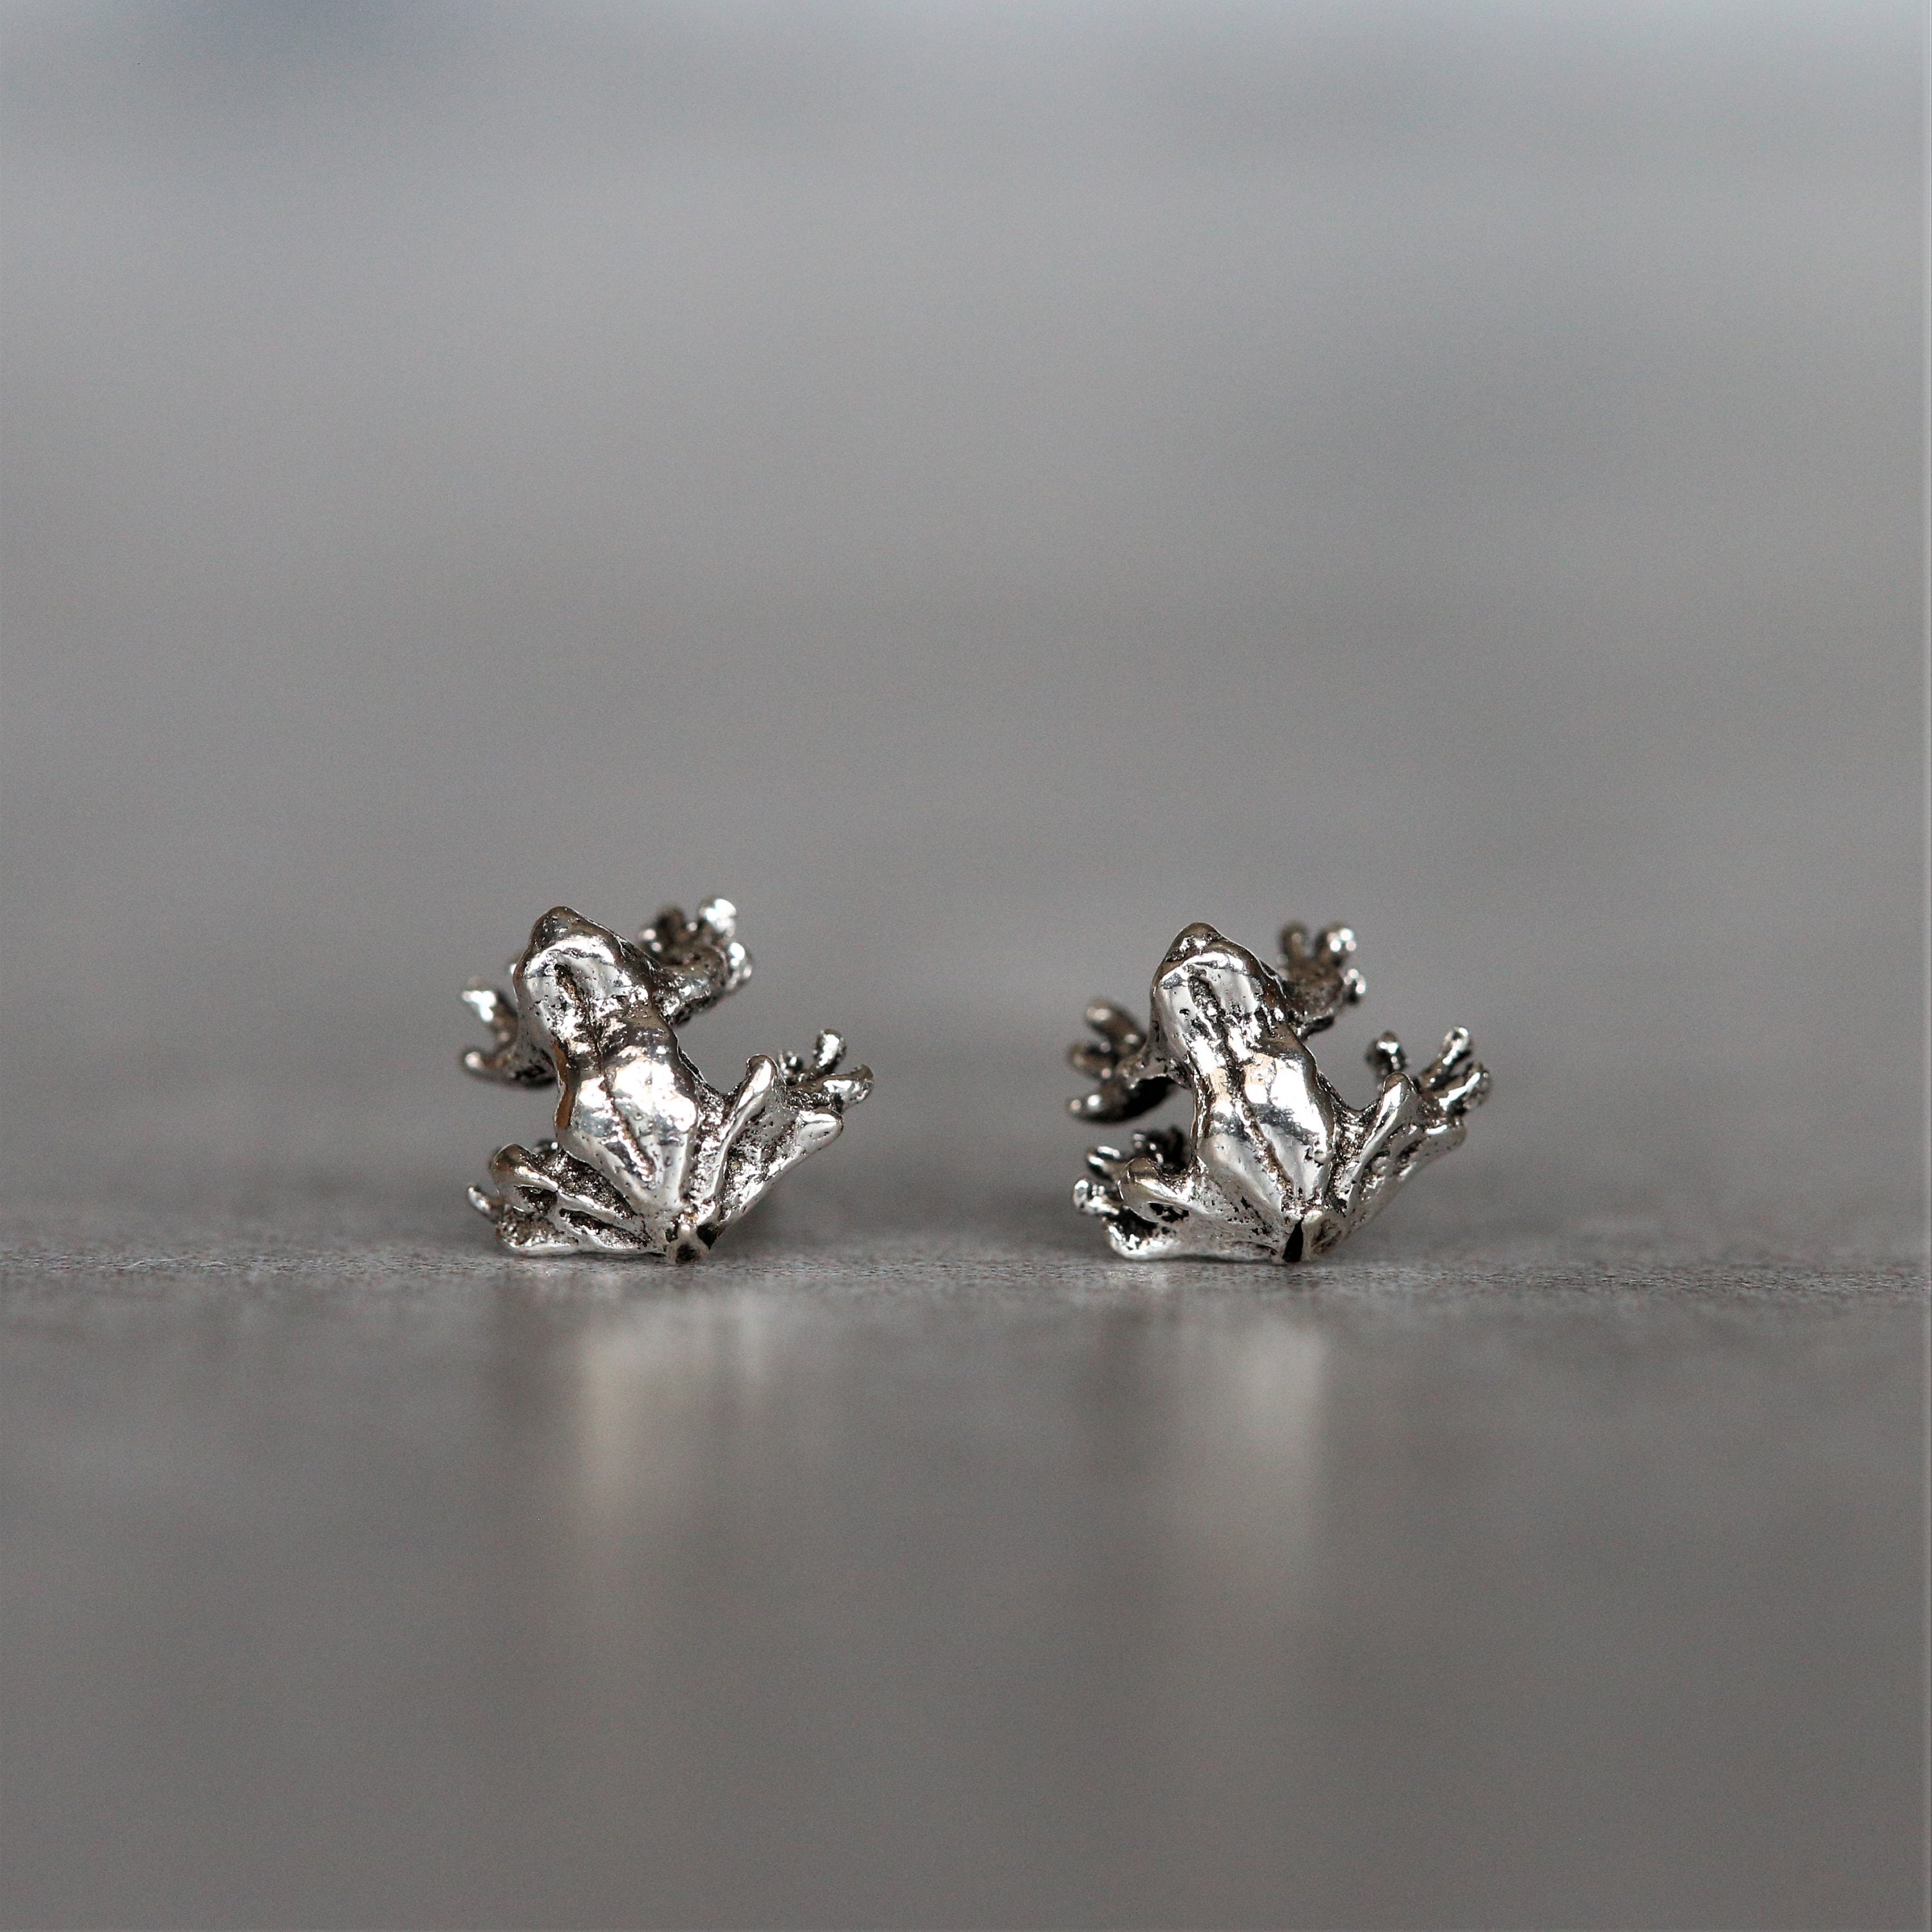 E5975 Oxidized Sterling Silver Frog Earrings Studs